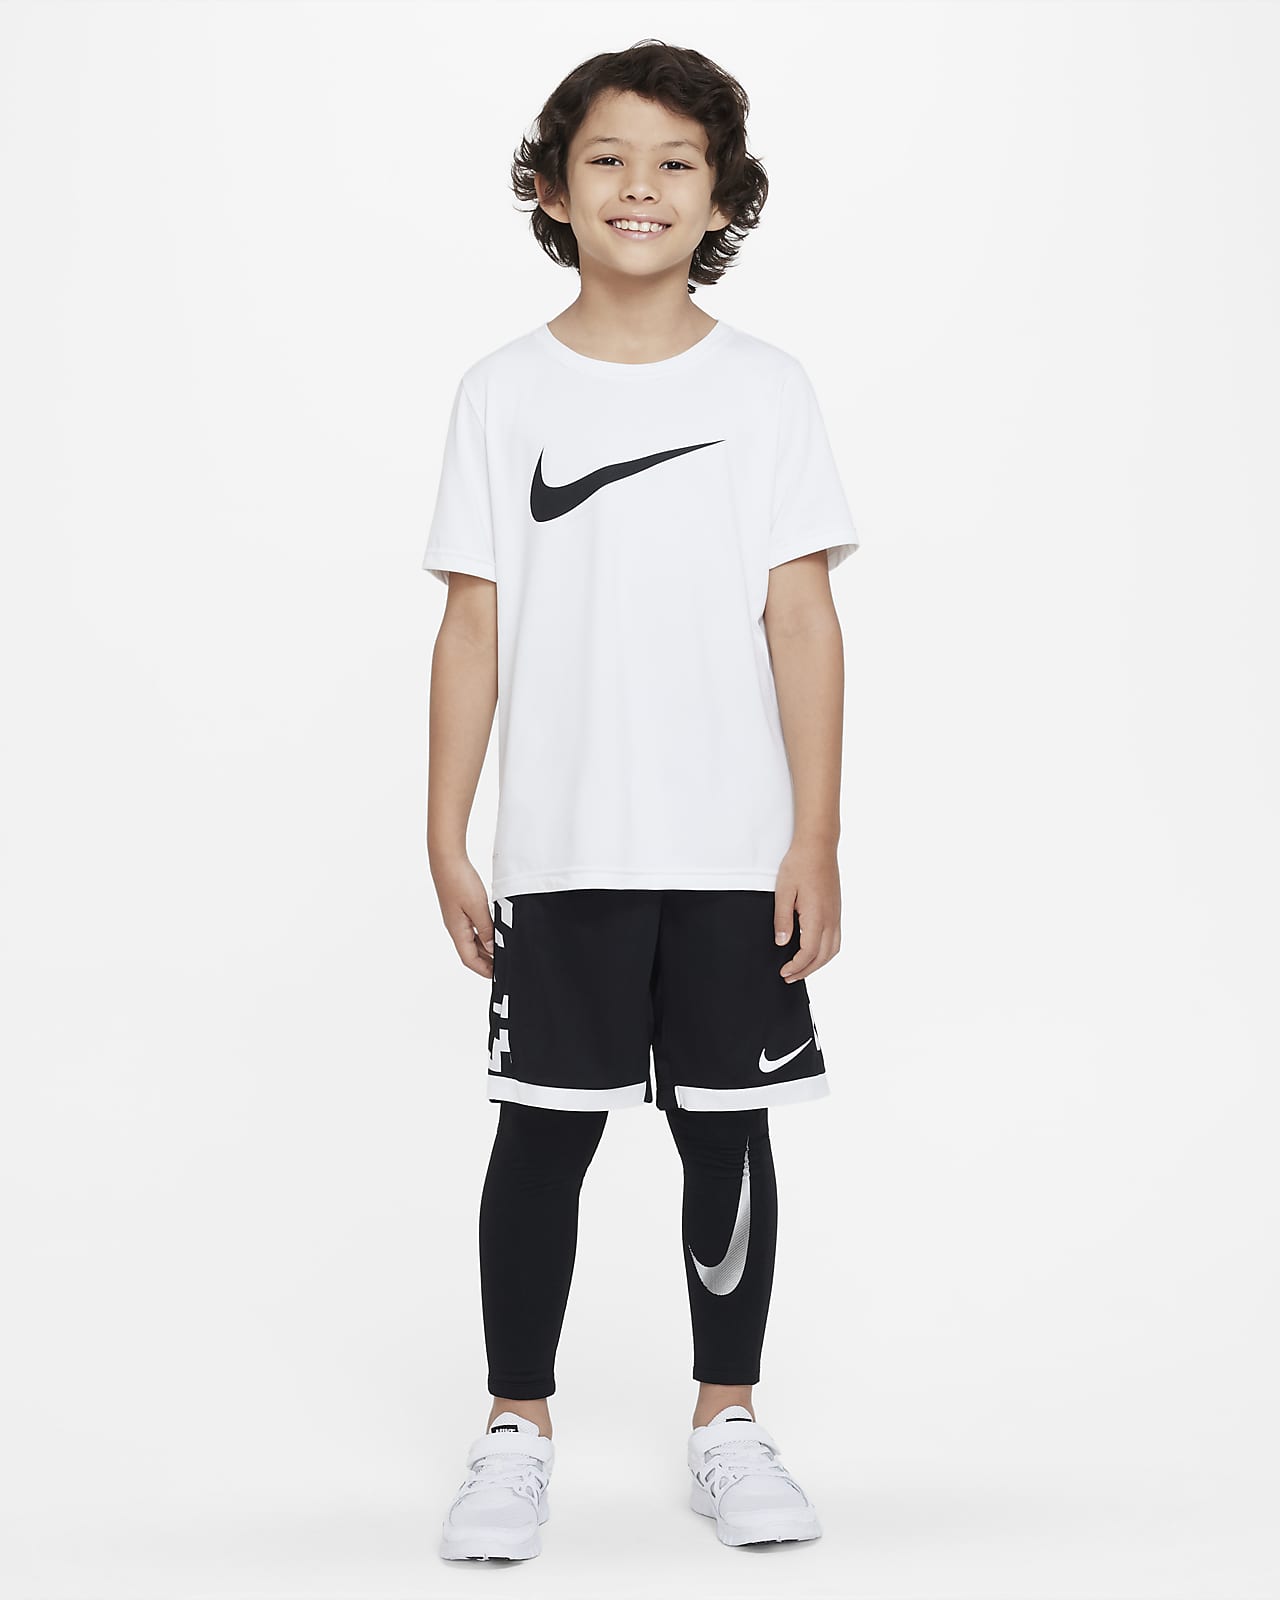 Warm Tights Nike Dri-FIT (Jungen). für Kinder DE Nike Pro ältere